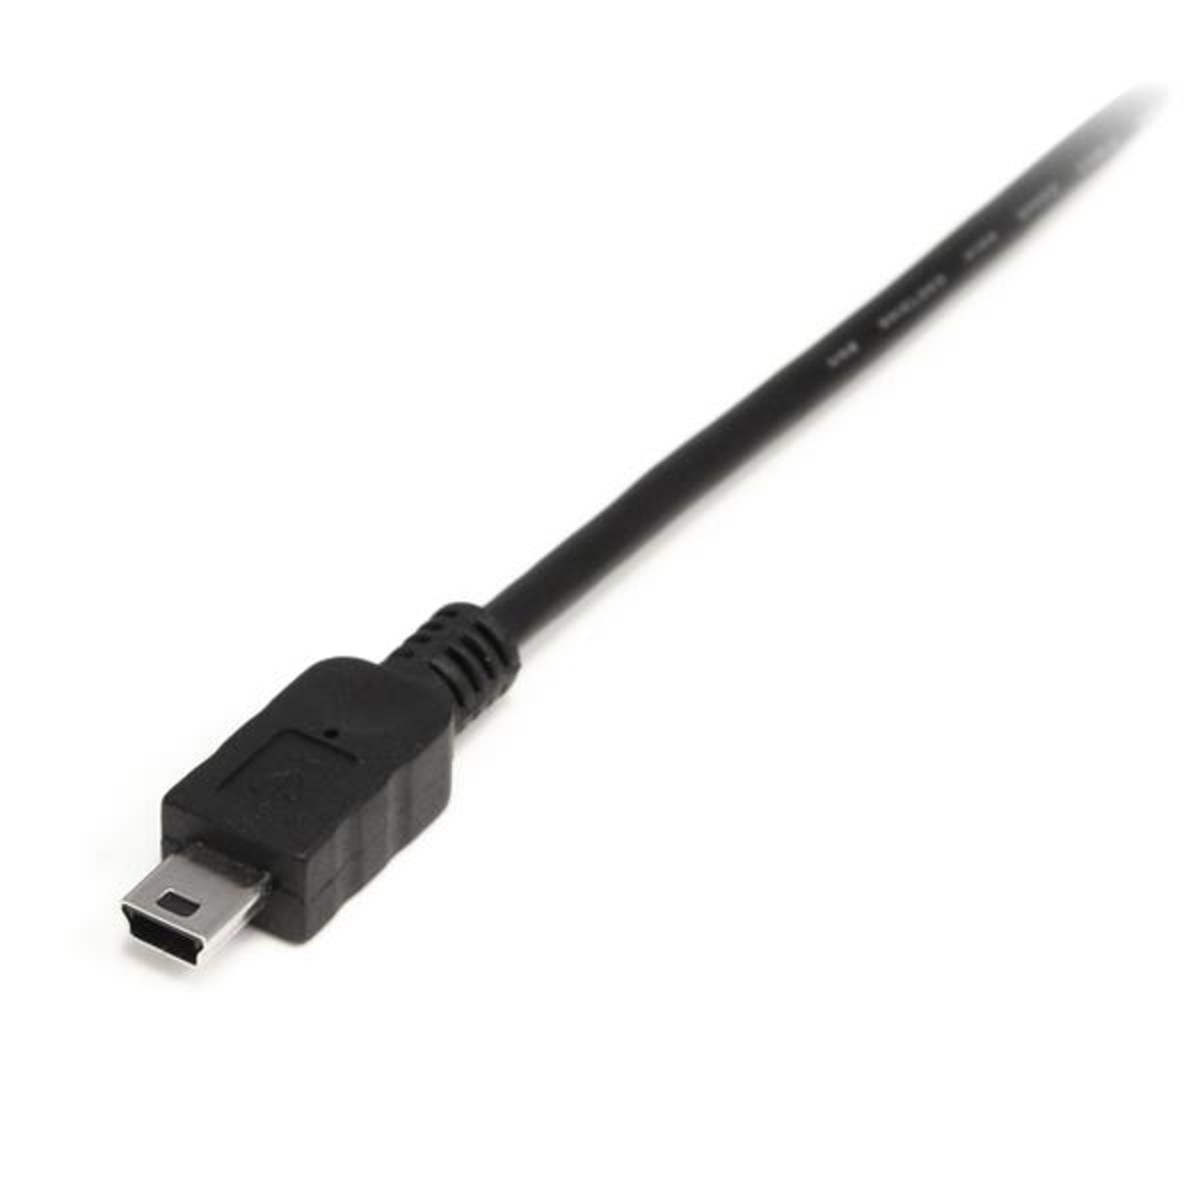 1m Mini USB 2.0 Cable - A to Mini B